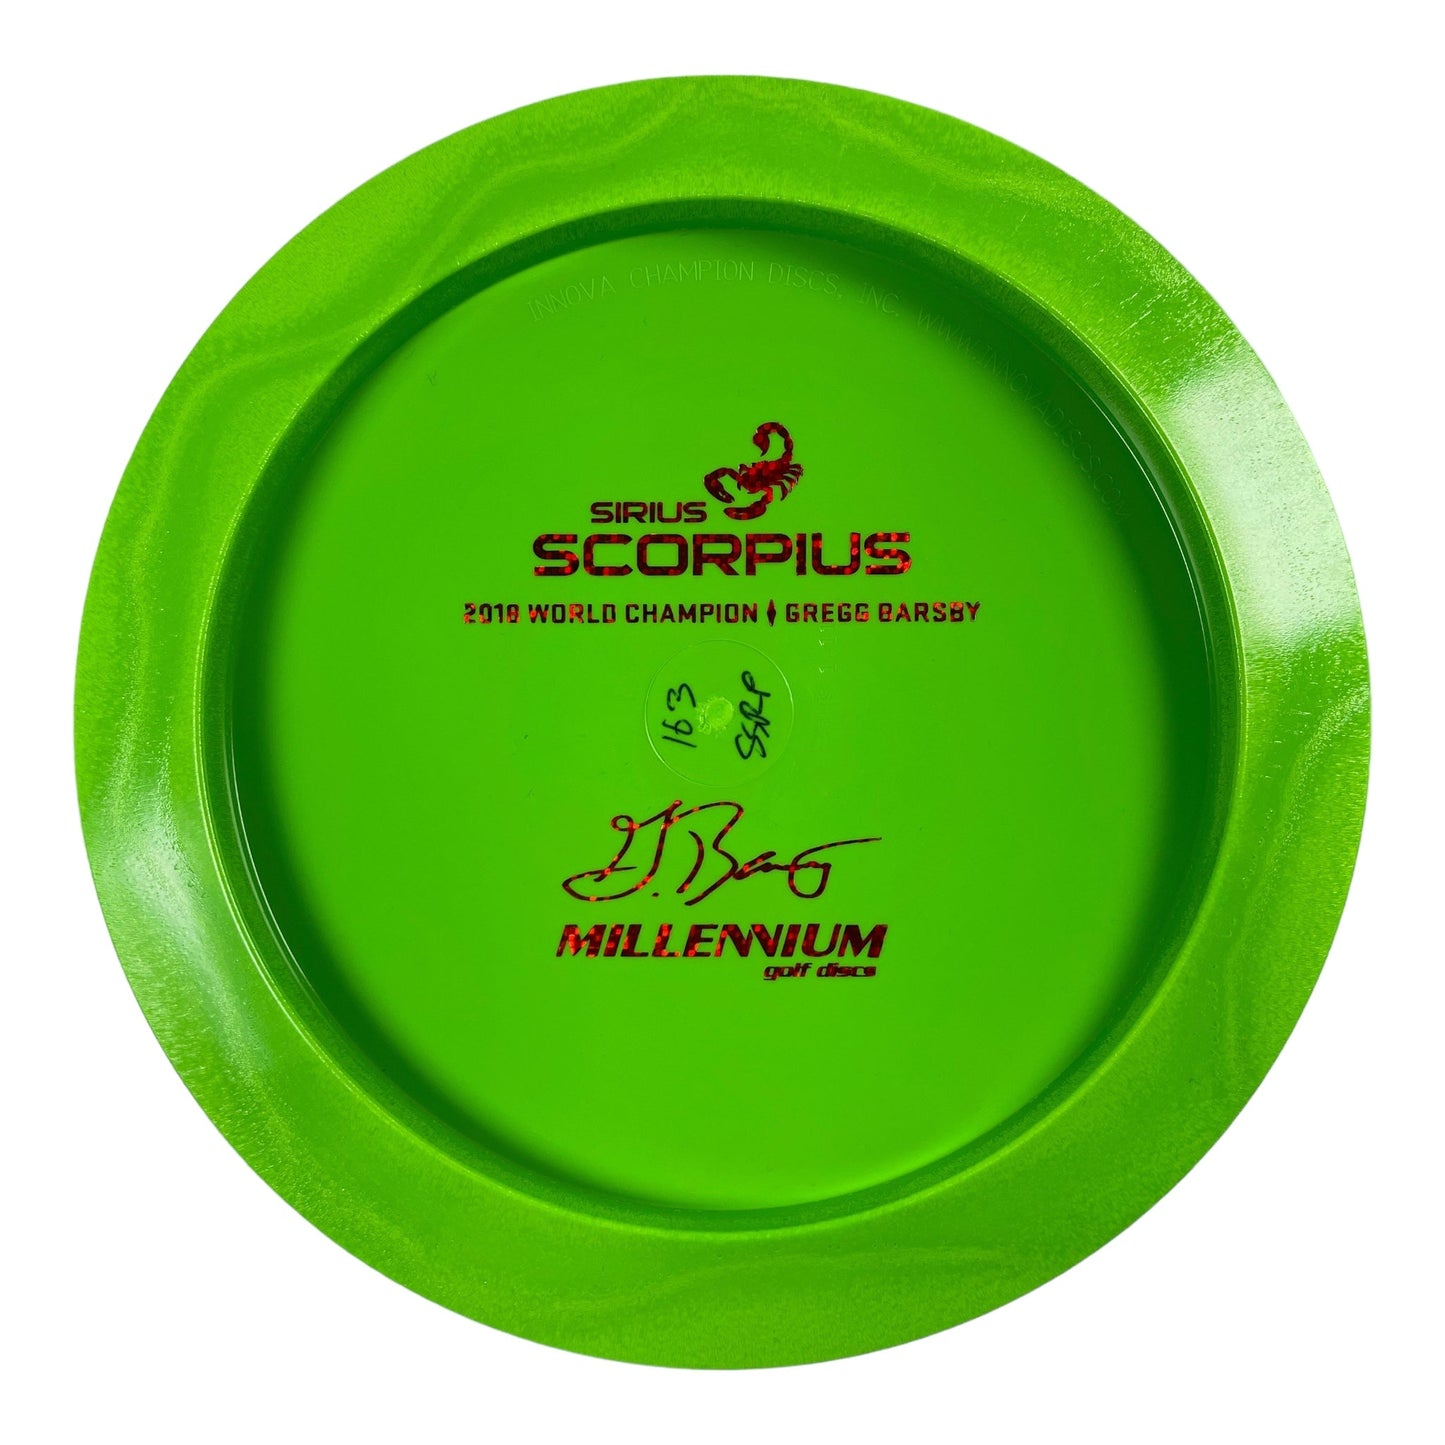 Millennium Golf Discs Scorpius | Sirius | Green/Red 163-175g (Gregg Barsby) Disc Golf